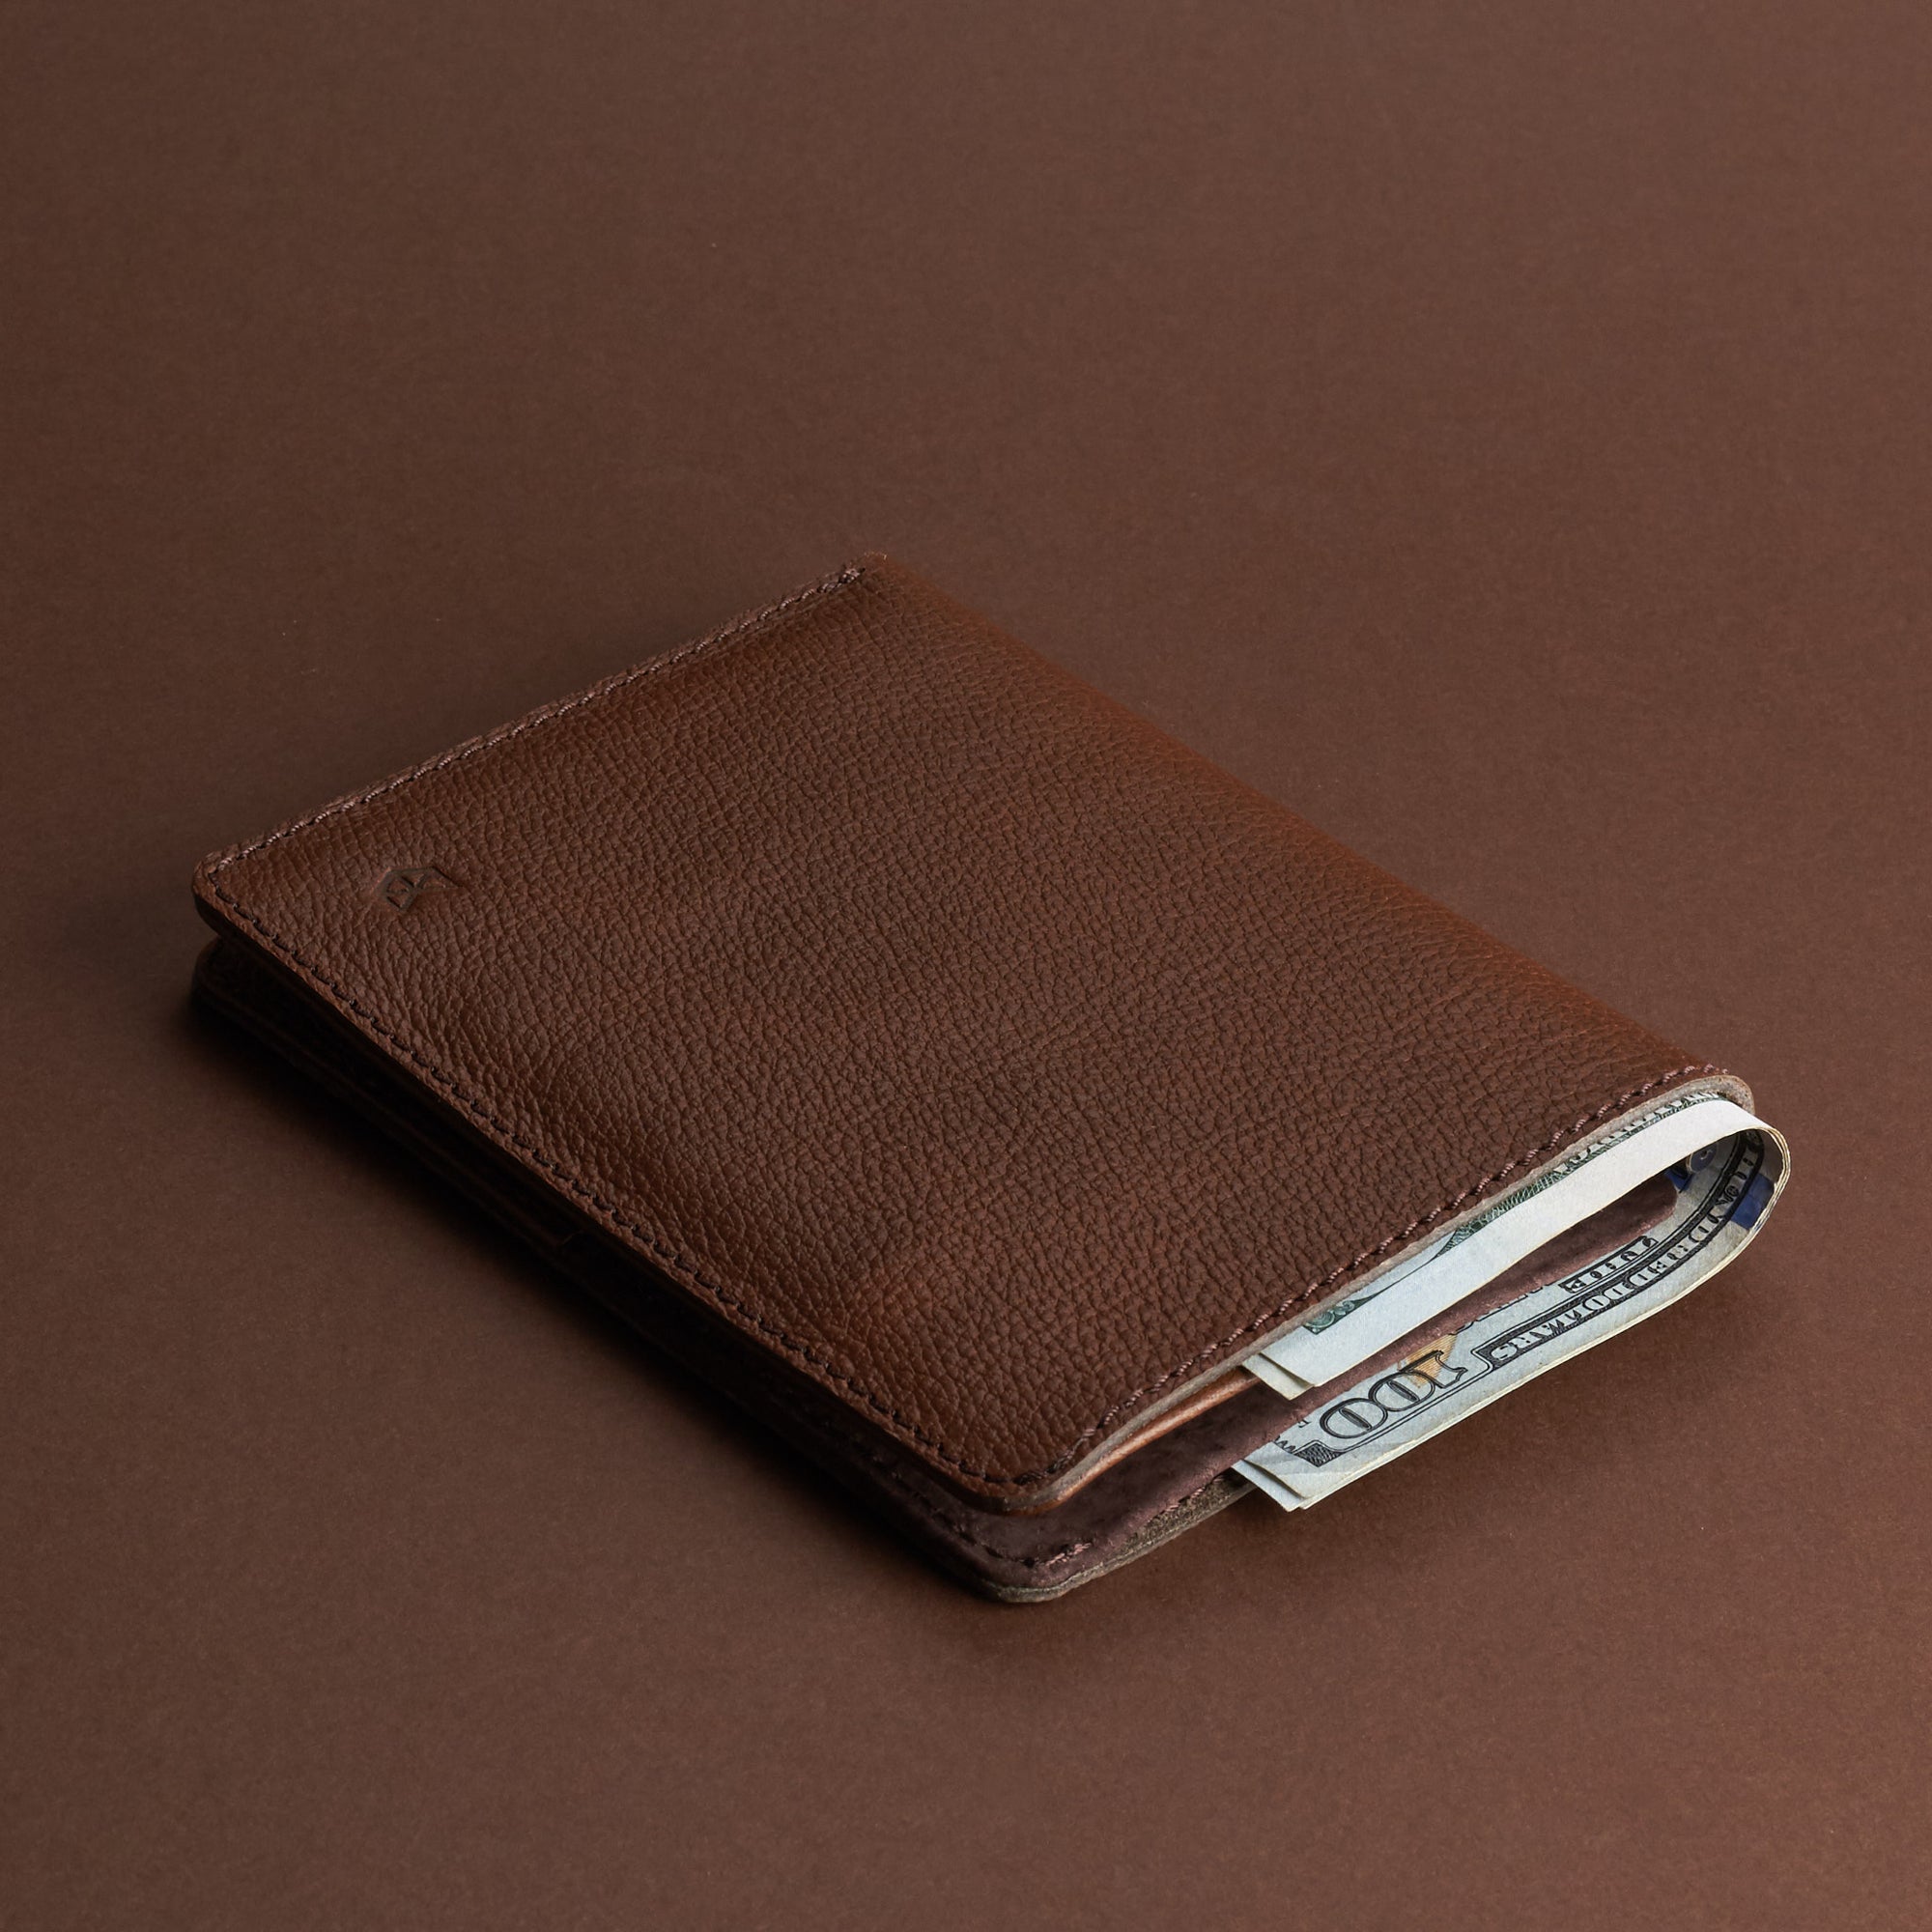 Passport and money. Pocket Passport Holder Travel Wallet Brown by Capra Leather